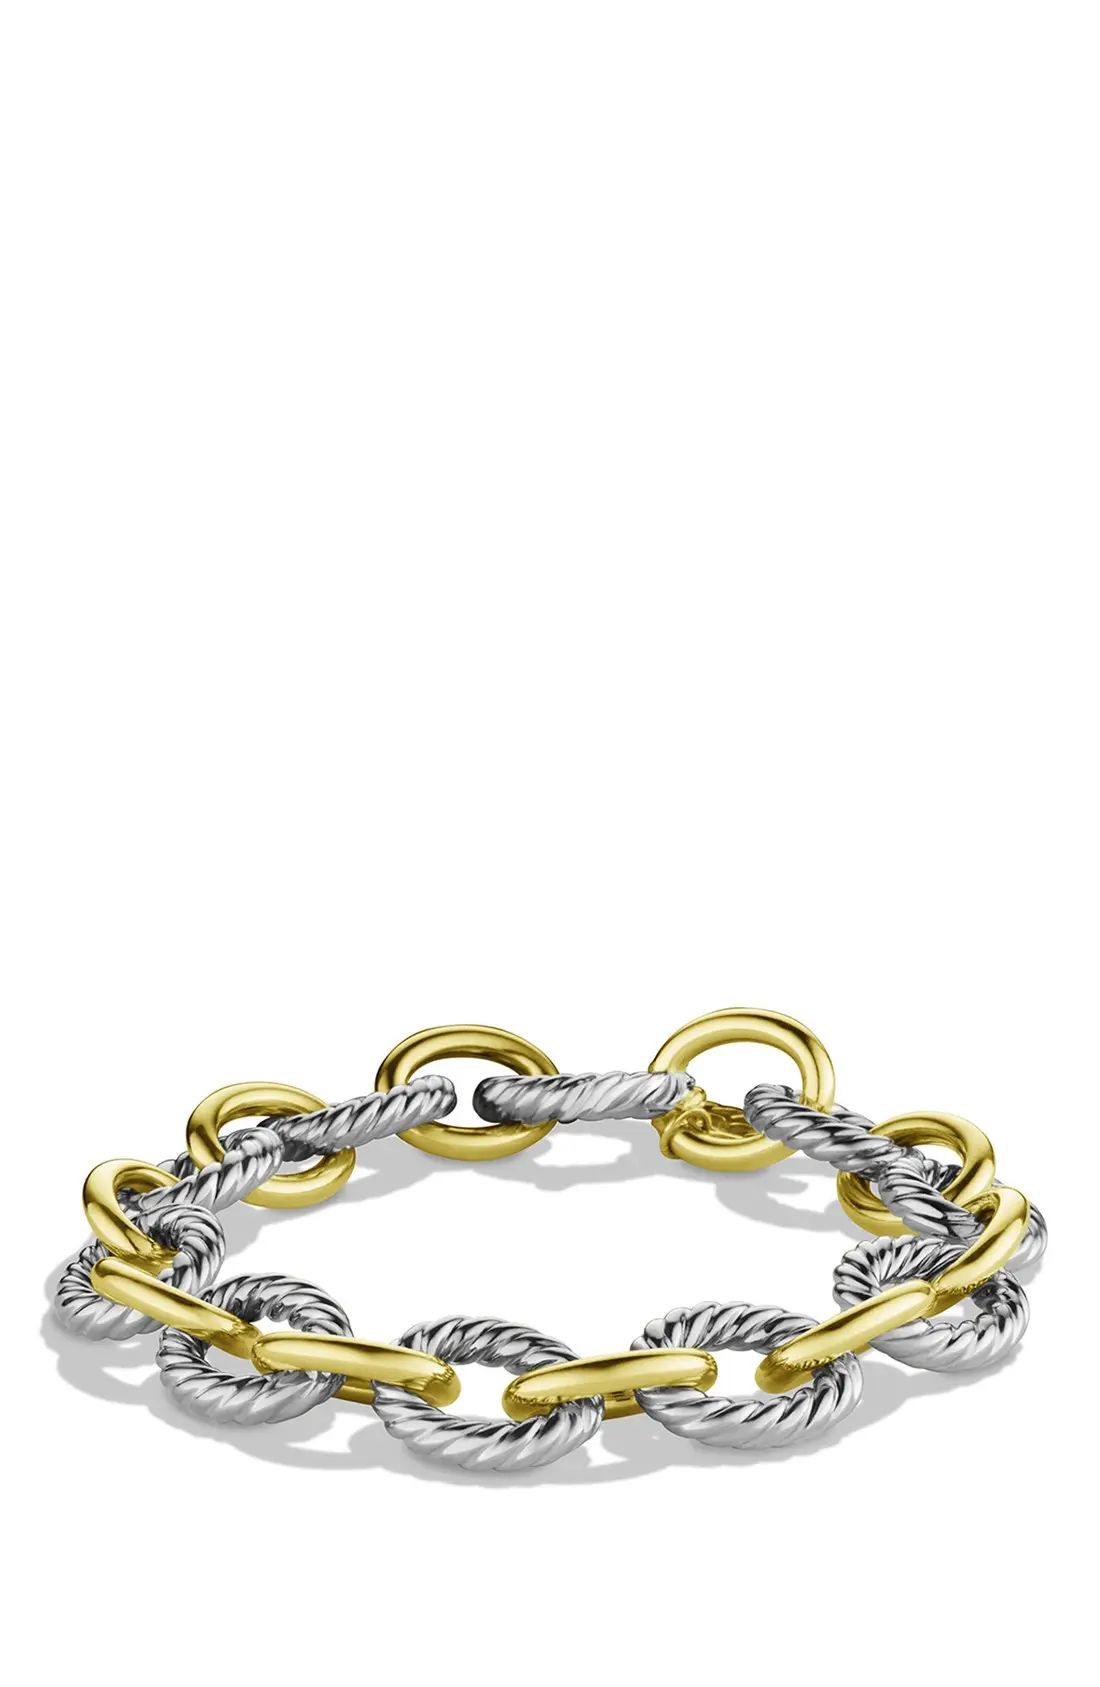 Women's David Yurman 'Oval' Large Link Bracelet With Gold | Nordstrom